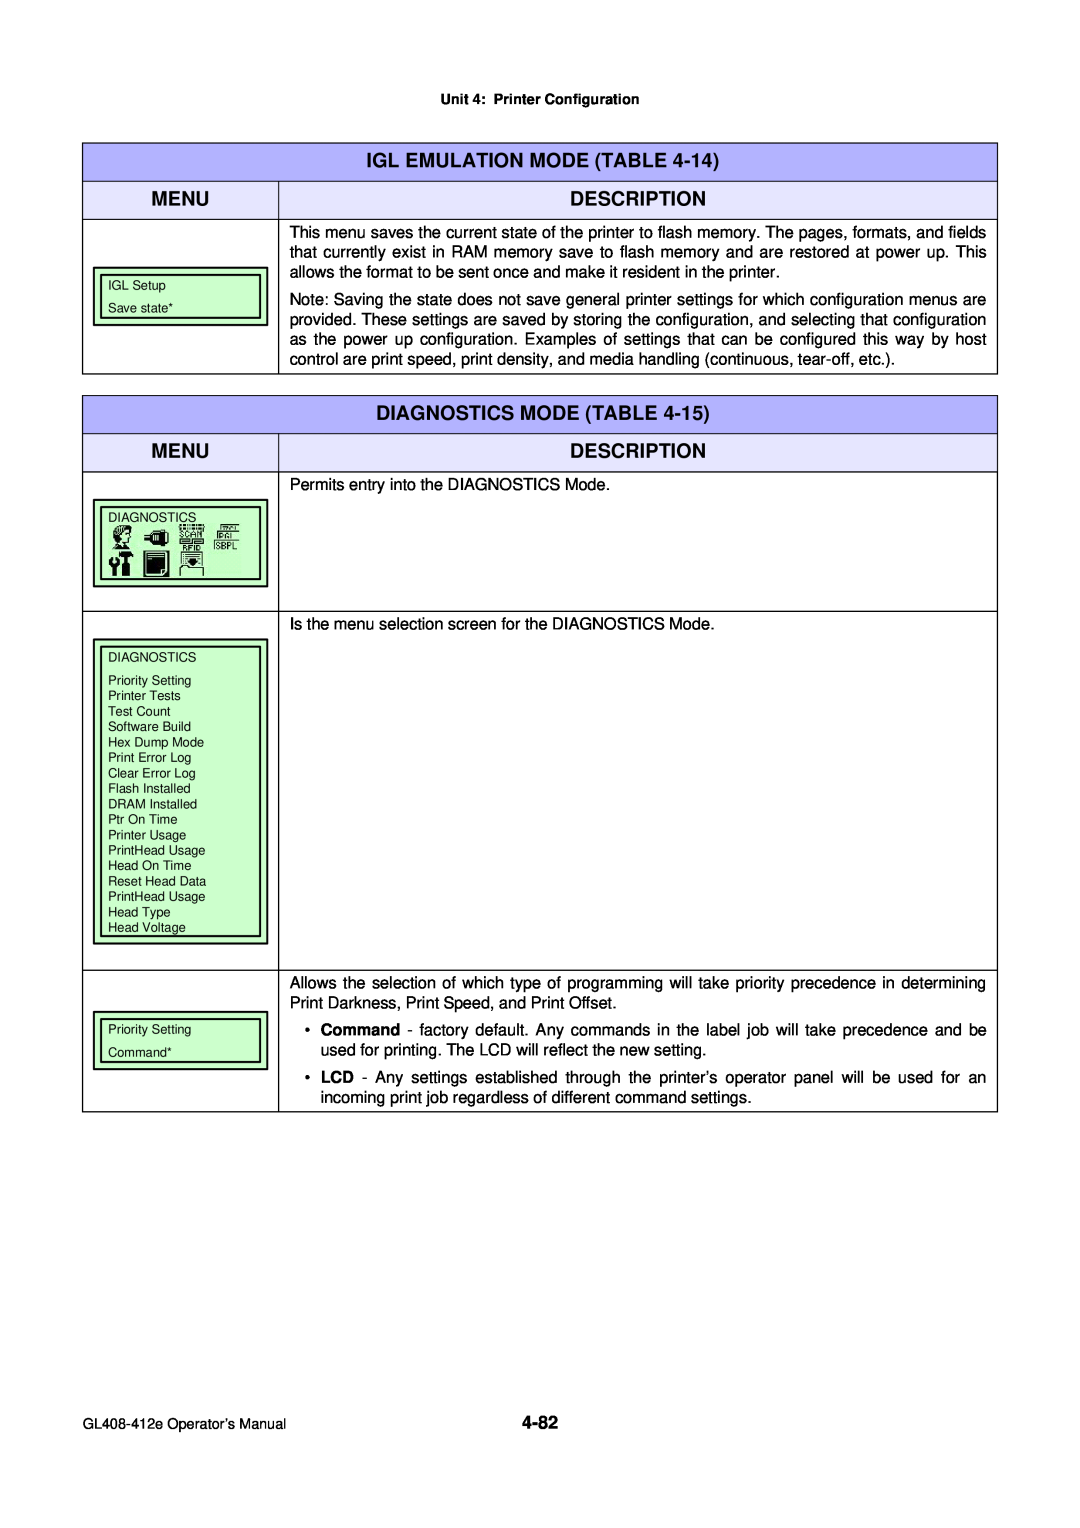 SATO GL4XXE manual Menu, Description, Igl Emulation Mode Table, Diagnostics Mode Table 